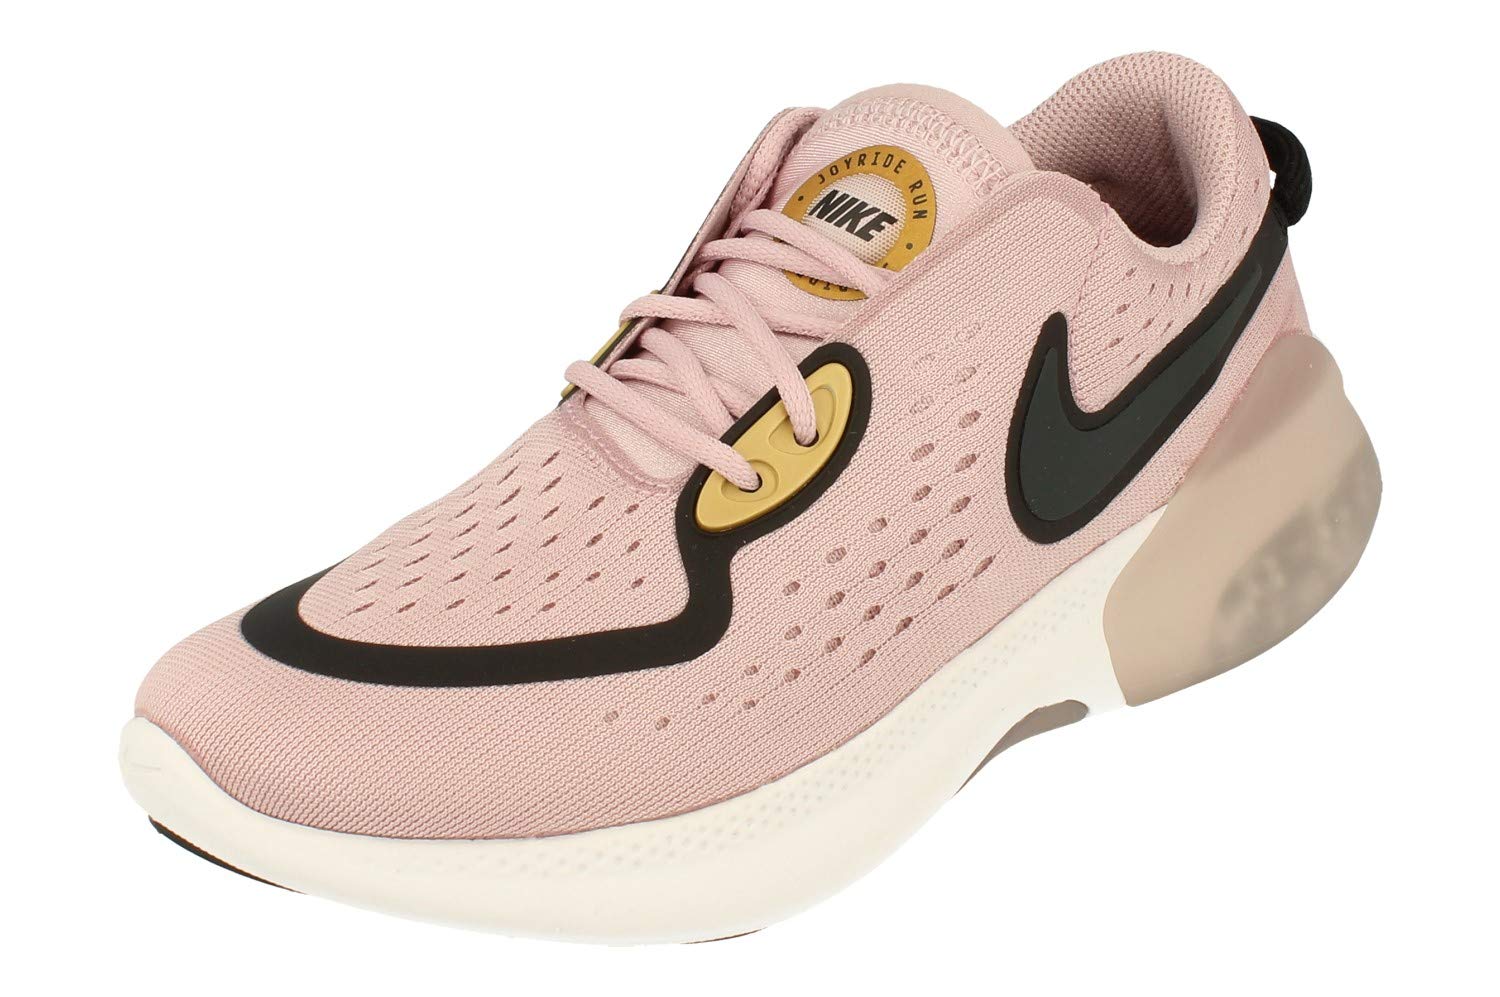 Nike Womens Joyride Dual Run Running Trainers CD4363 Sneakers Shoes (UK 6 US 8.5 EU 40, Plum Chalk Black Metallic Gold 500)